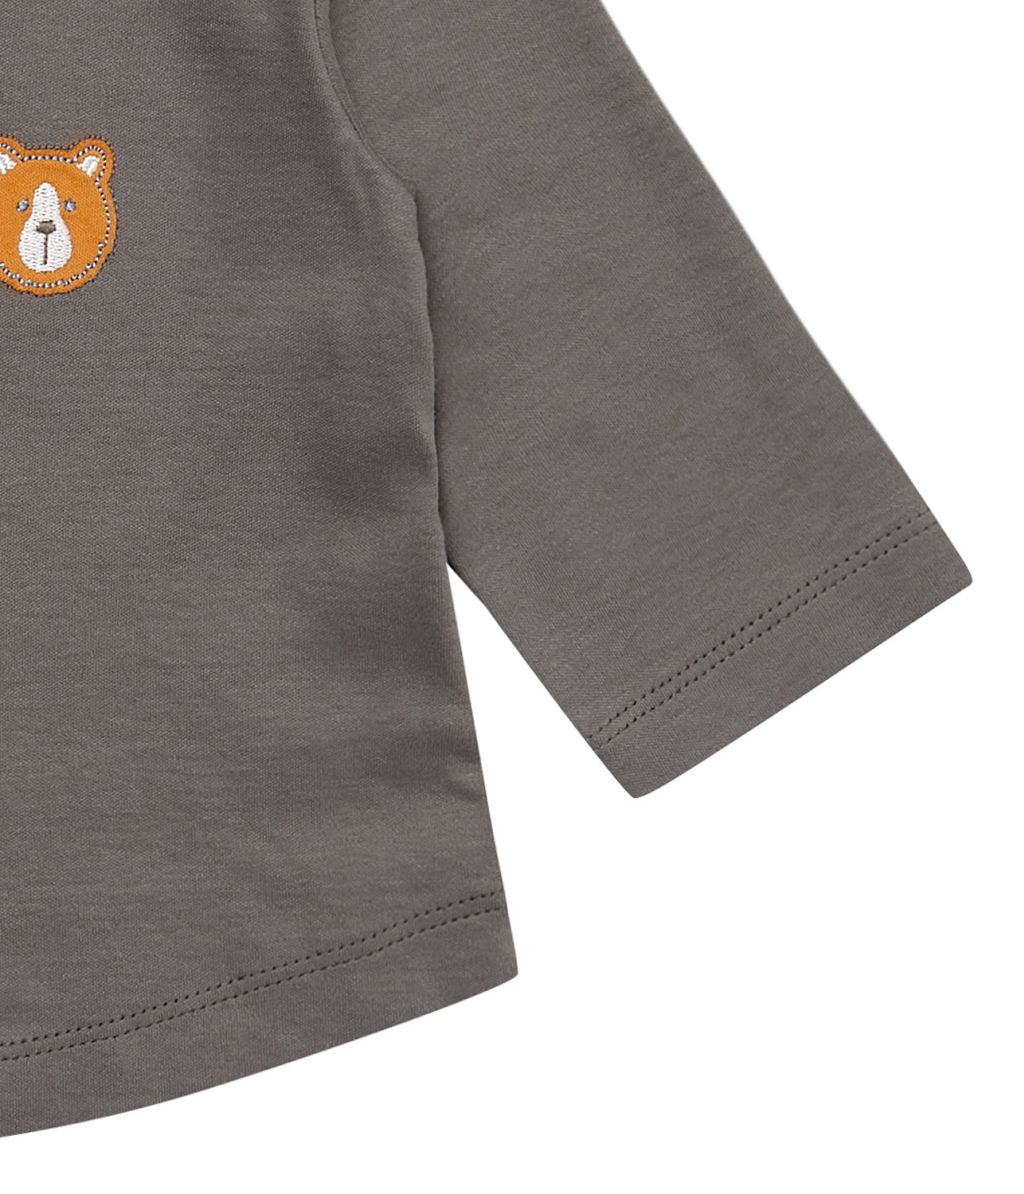 Chesmu Baby Shirt L/S dark grey+bear heads applic 62